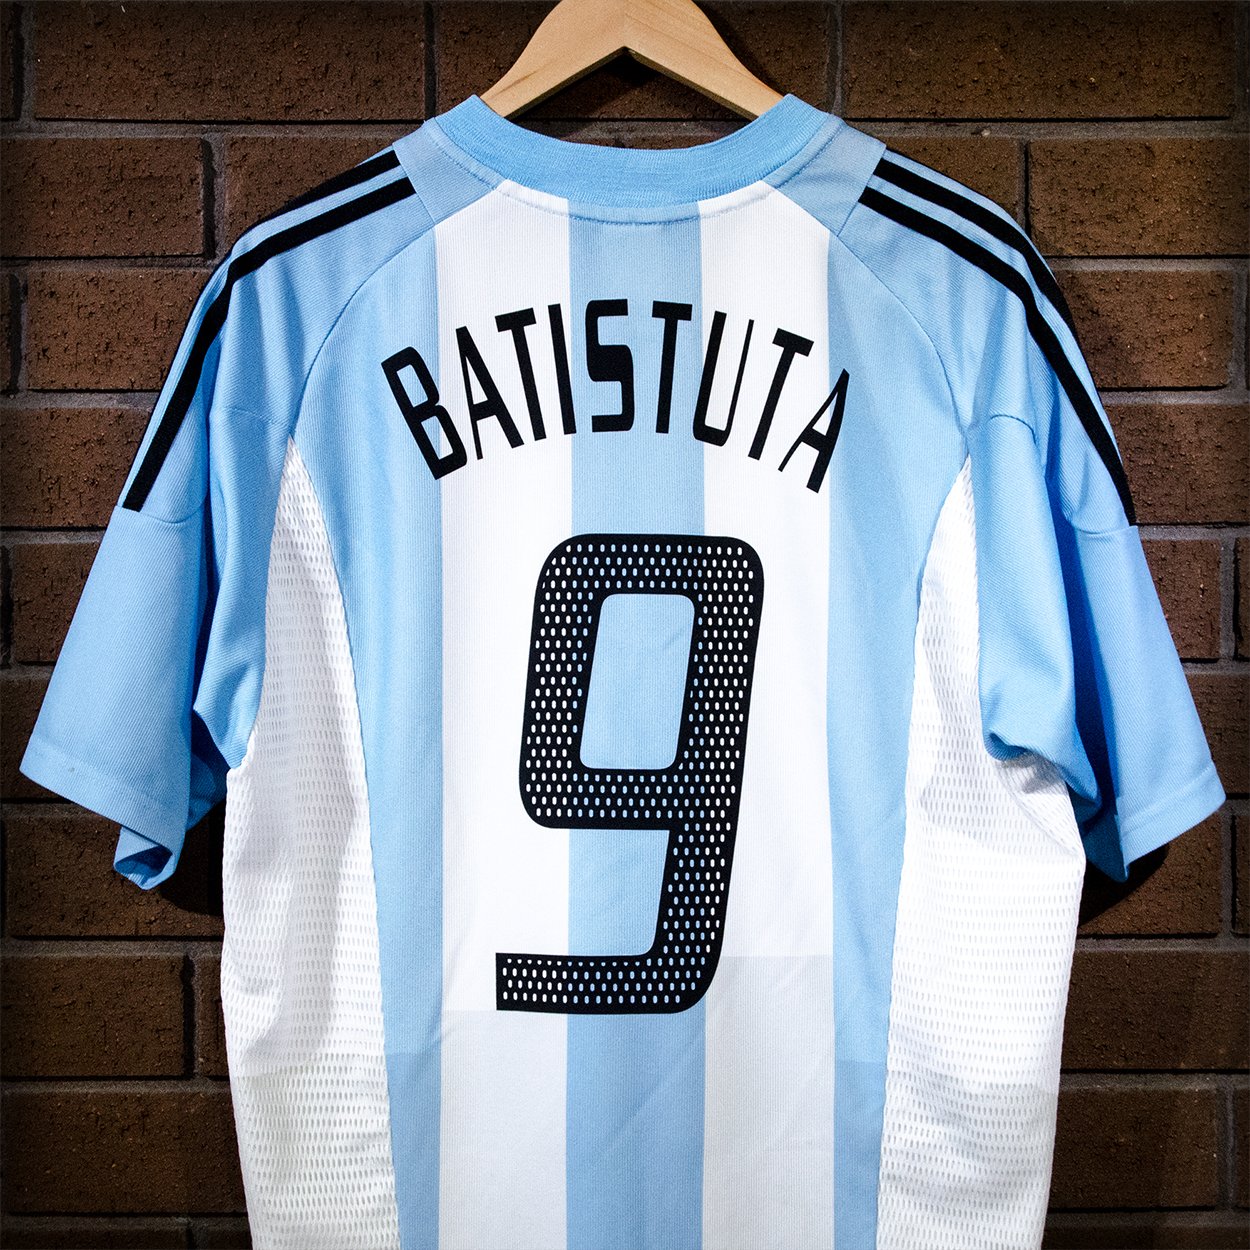 Classic Football Shirts on Twitter: "Argentina 02-04 home shirt Batistuta  #9 #batigol https://t.co/IFHzcAMOhr" / Twitter